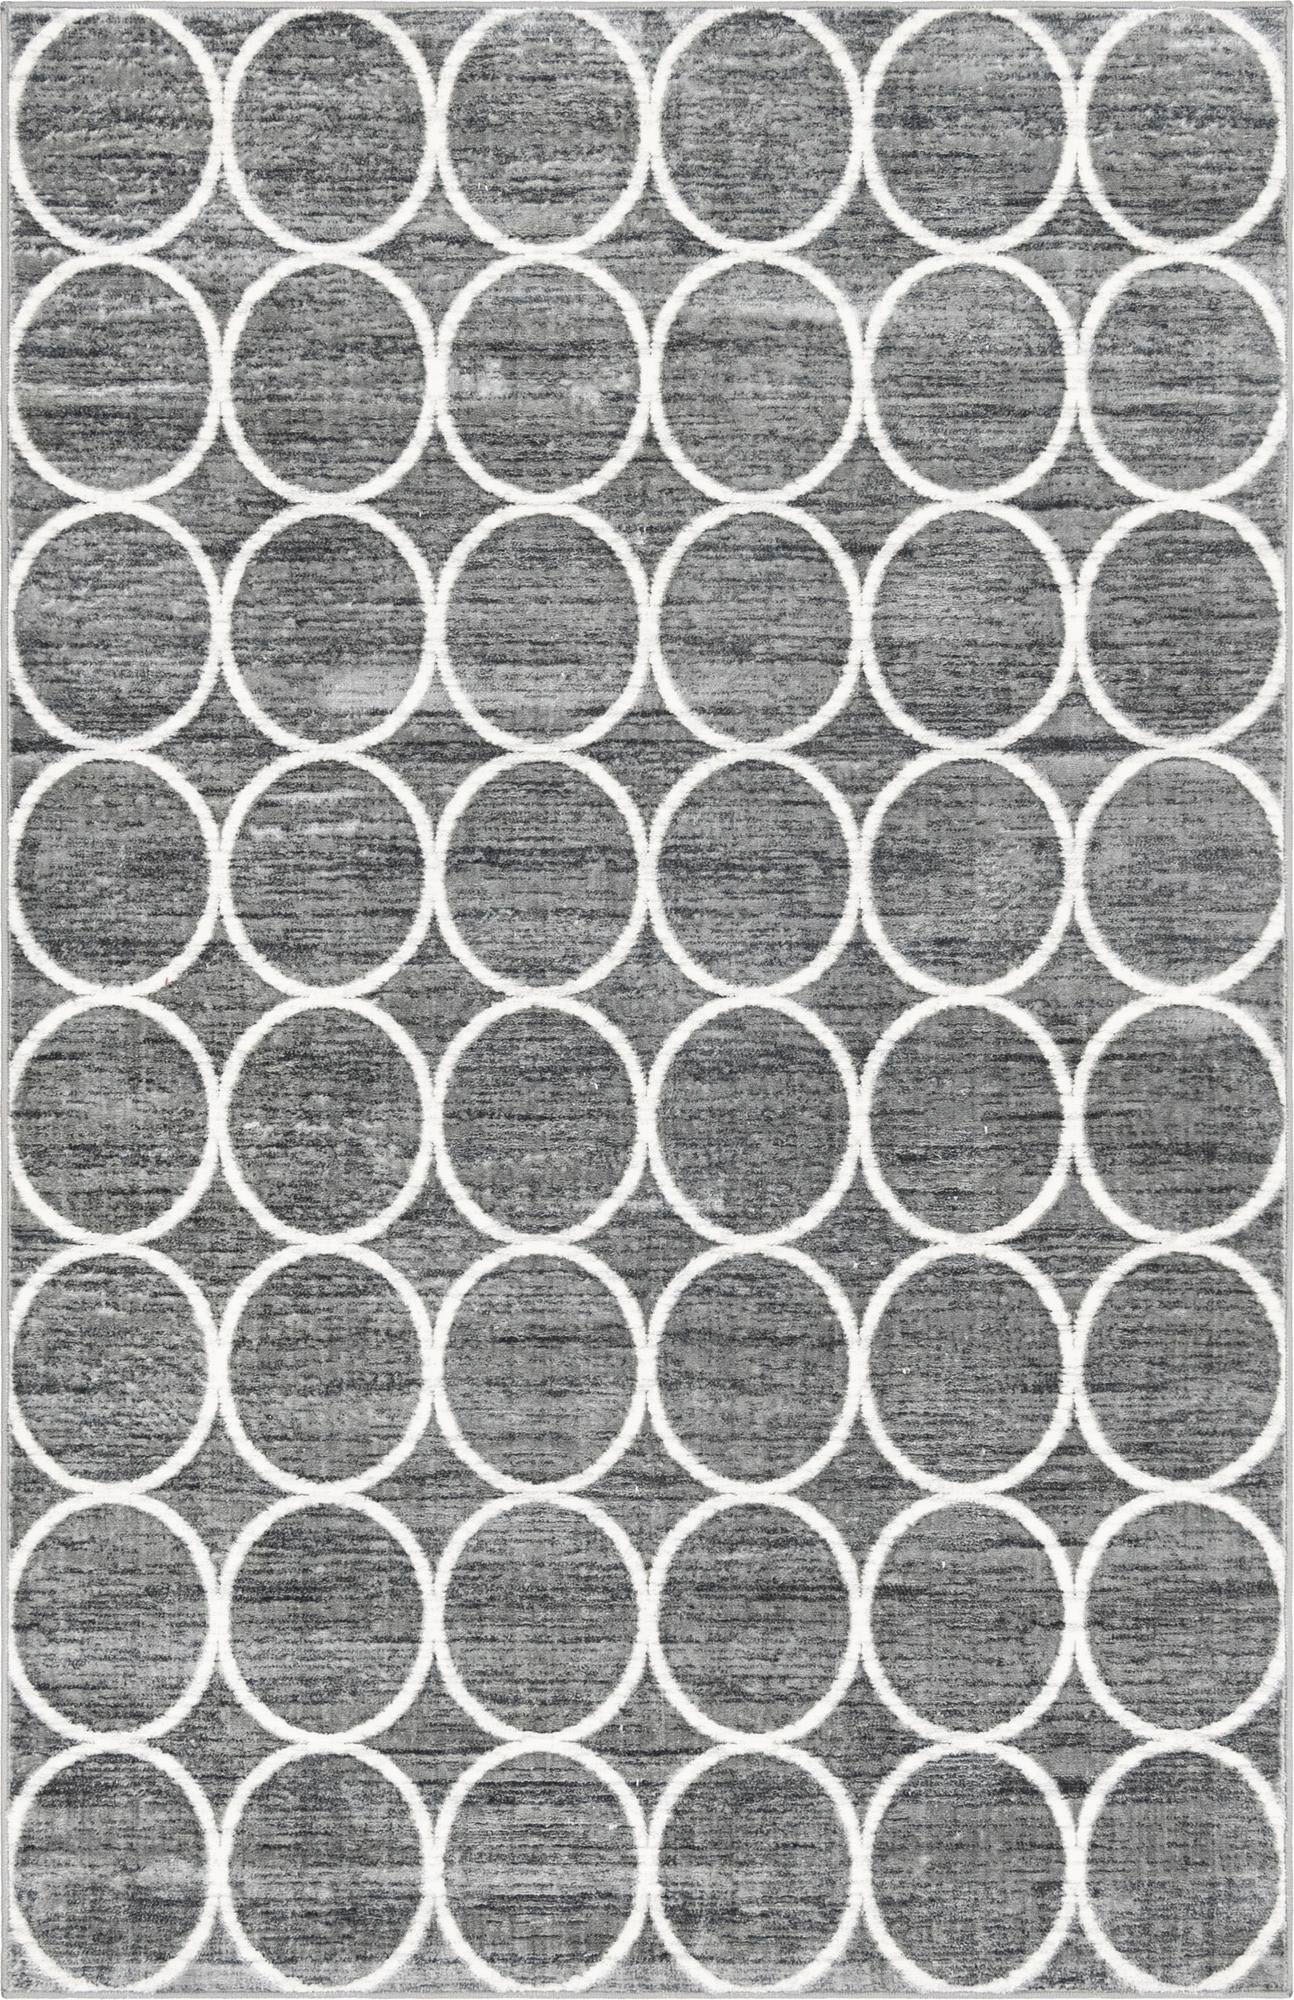 Myflair Möbel & Accessoires Teppich »Titan Trellis«, rechteckig, Kurzflor, gewebt, modernes Design, Motiv Kreise